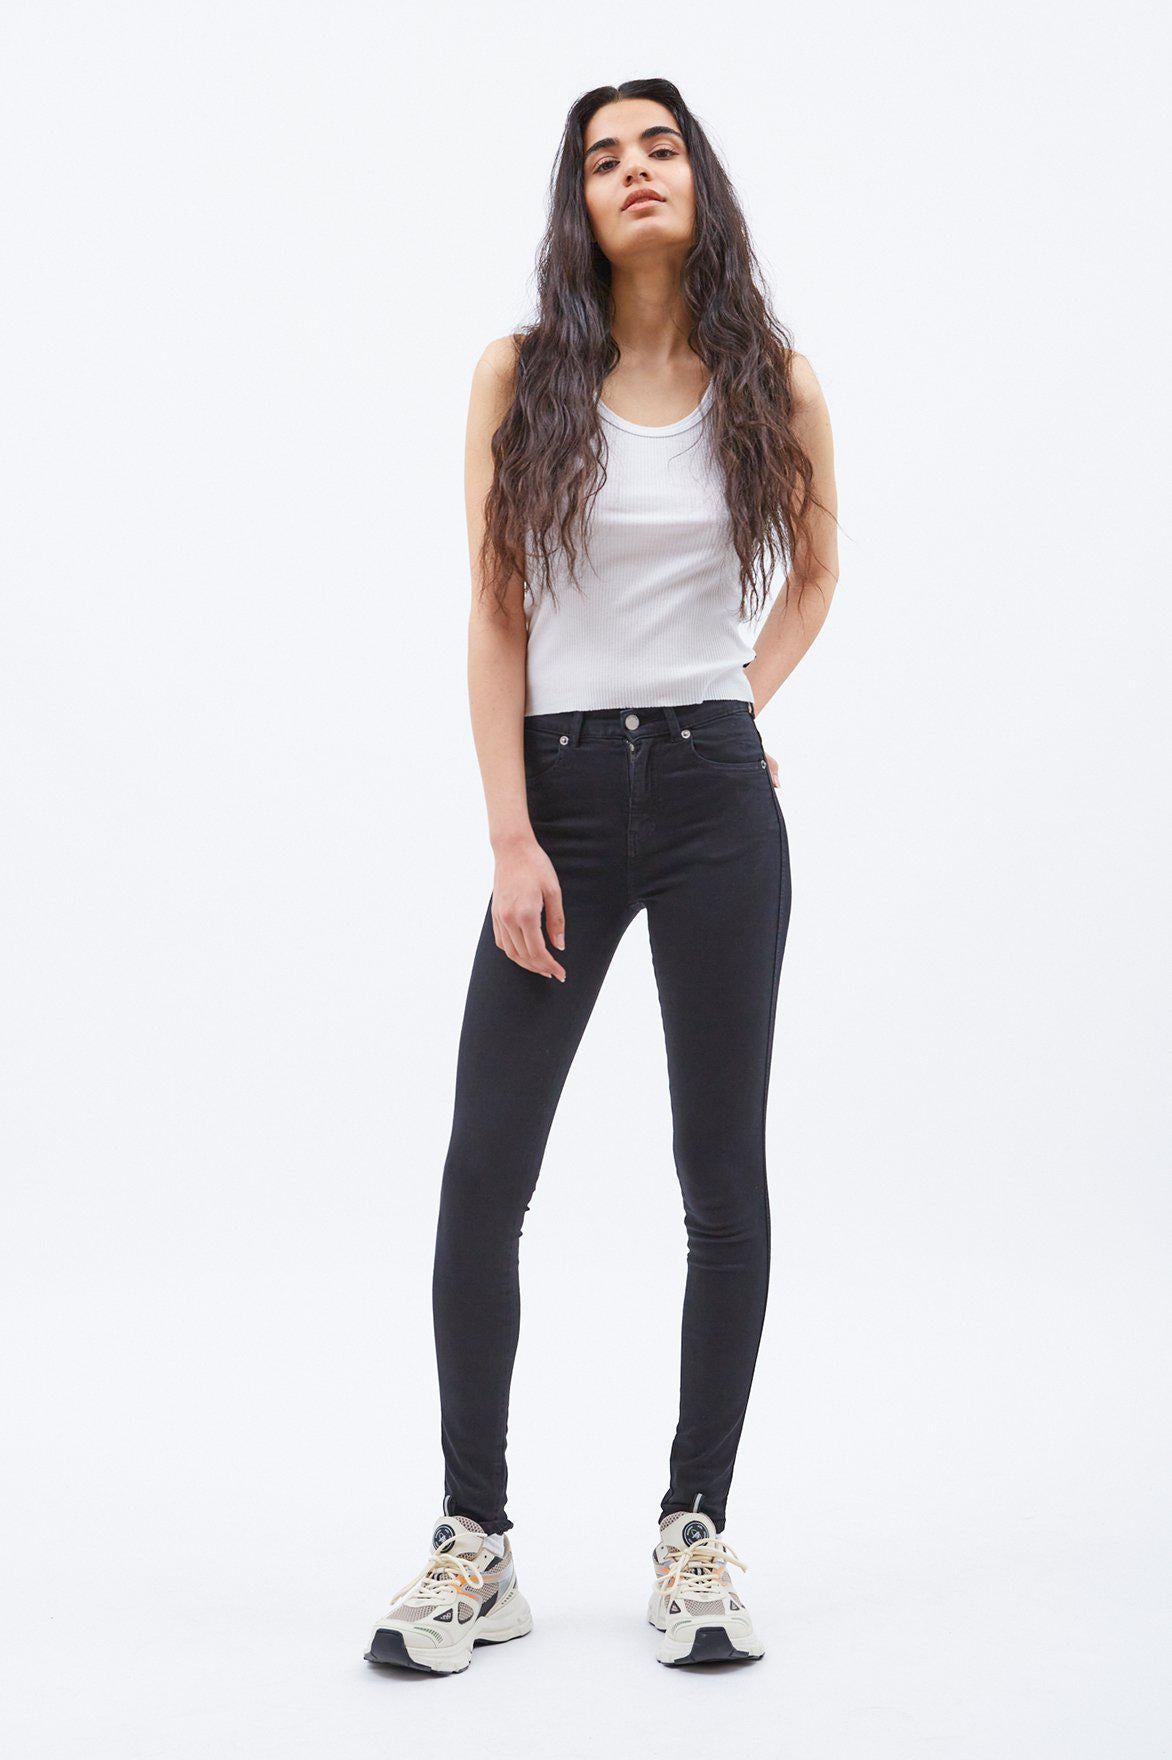 Moxy black skinny jeans high waste